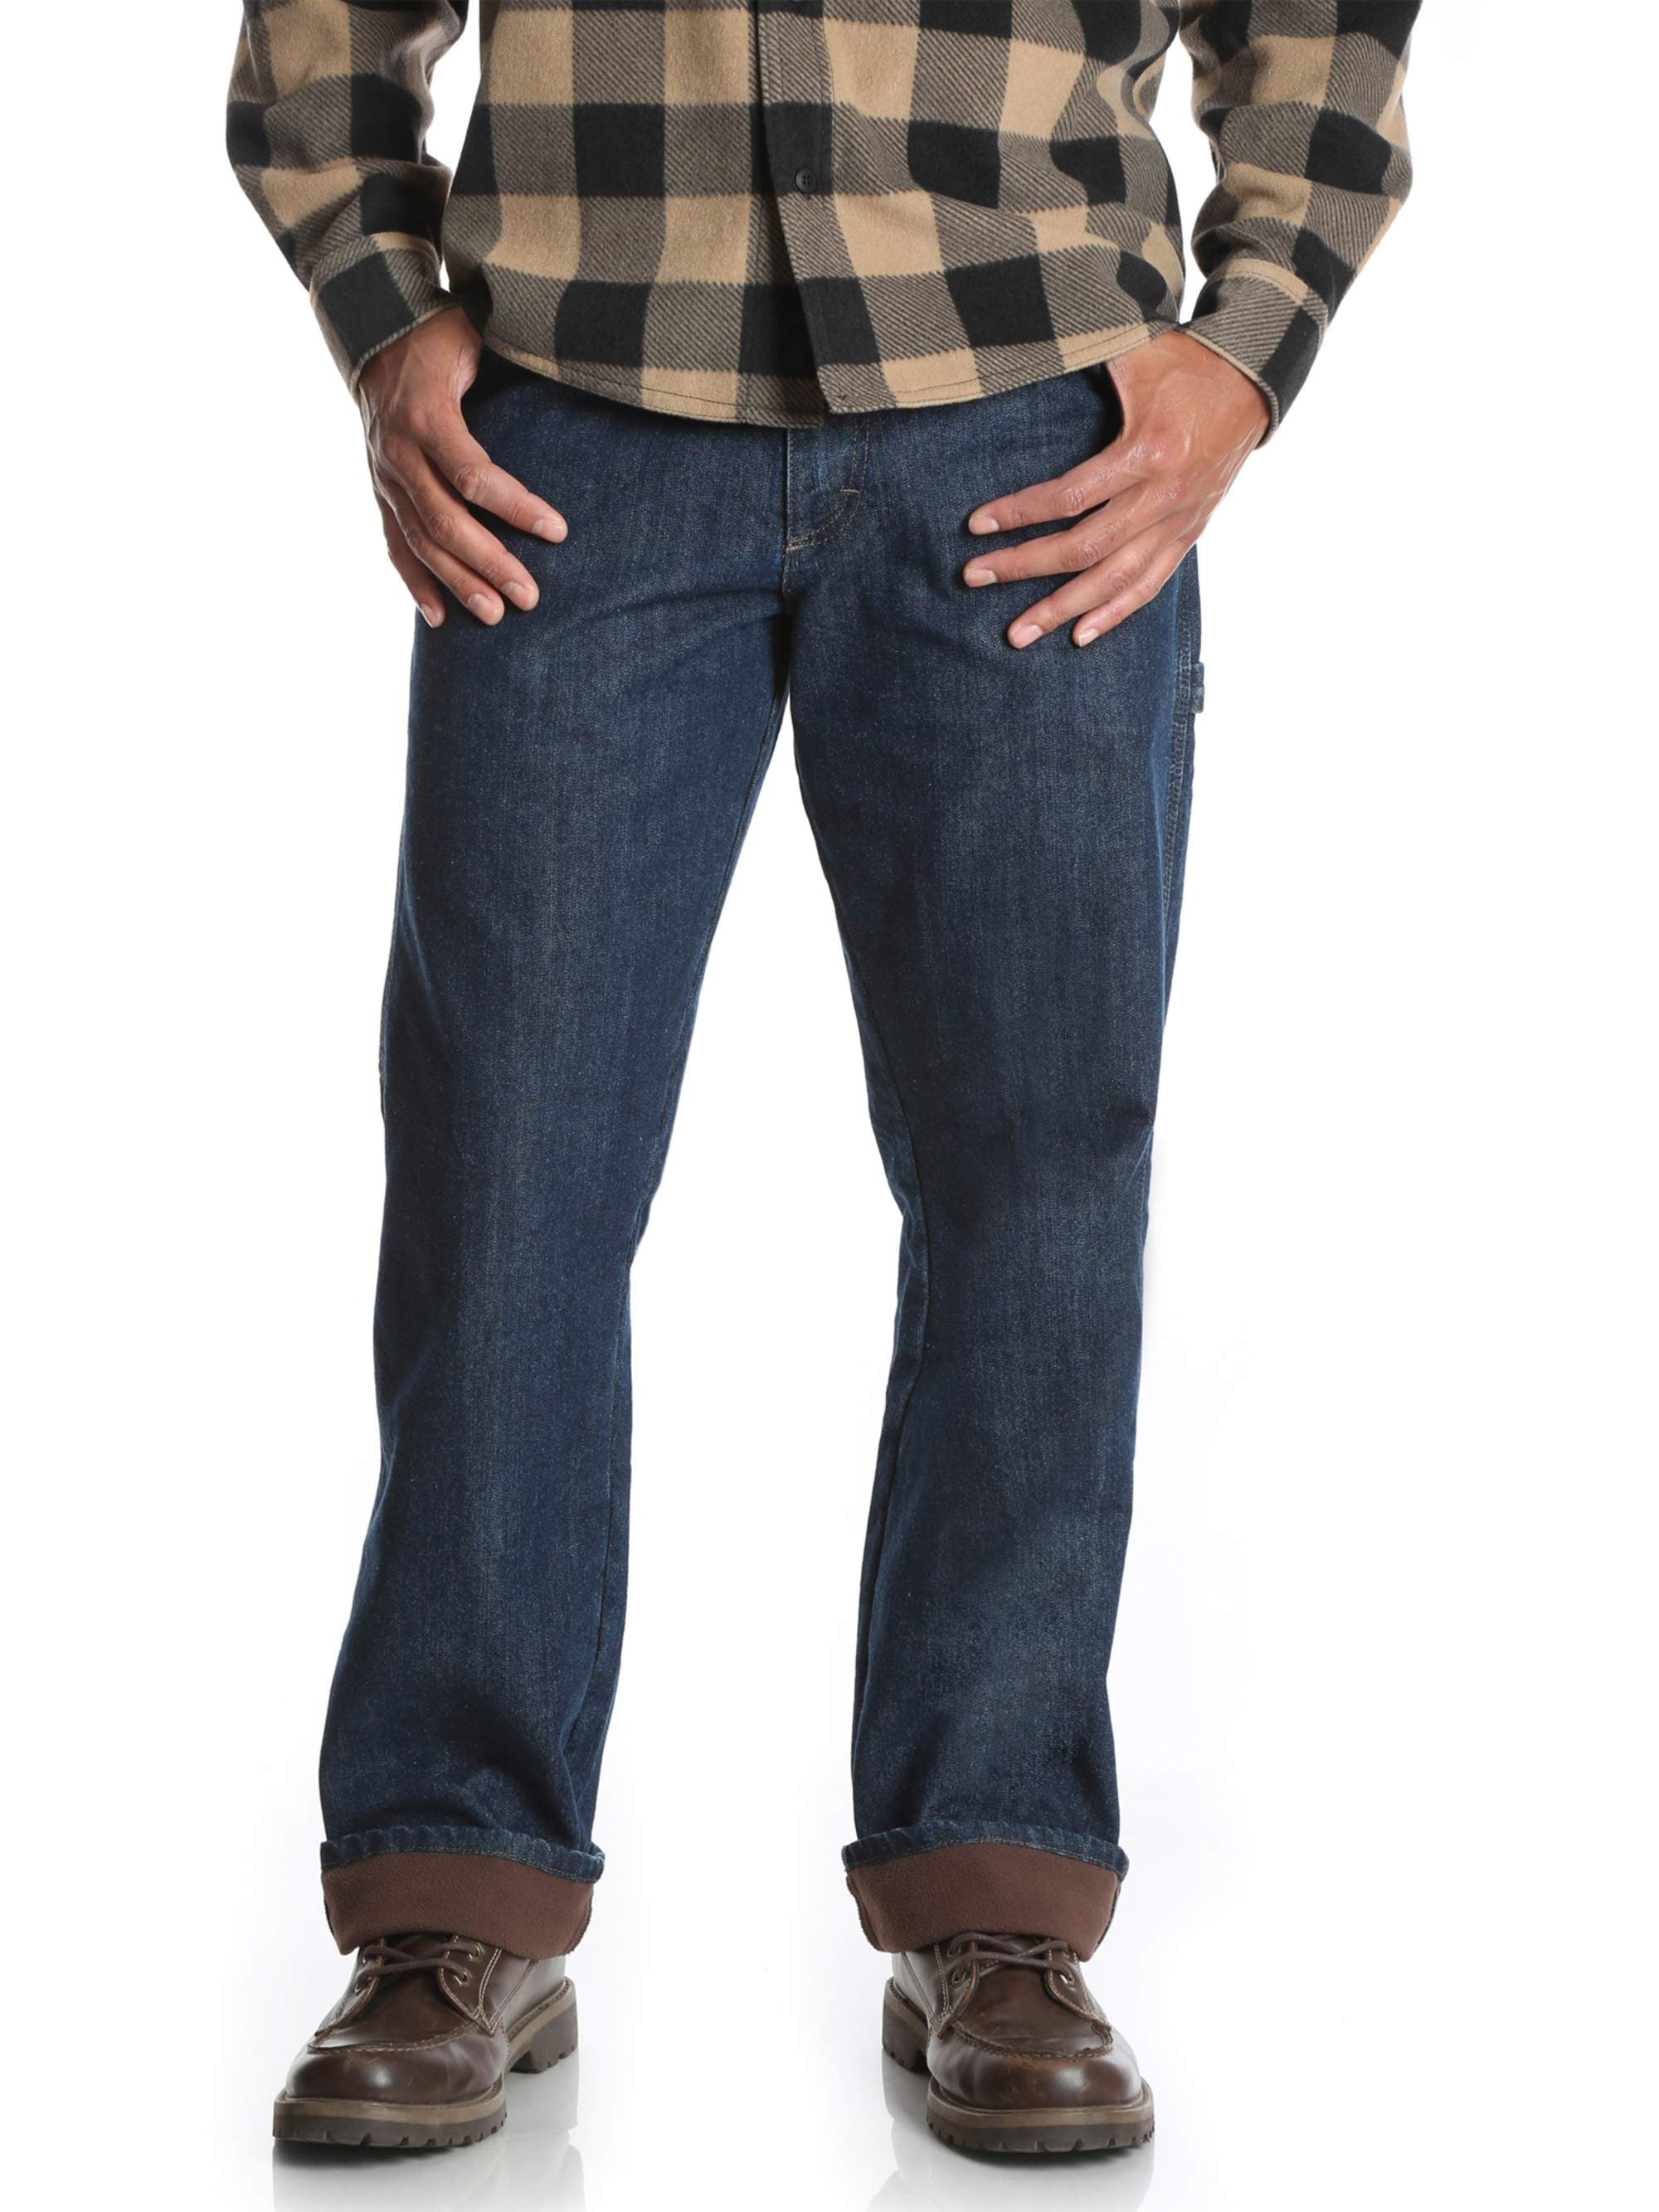 wrangler insulated jeans mens